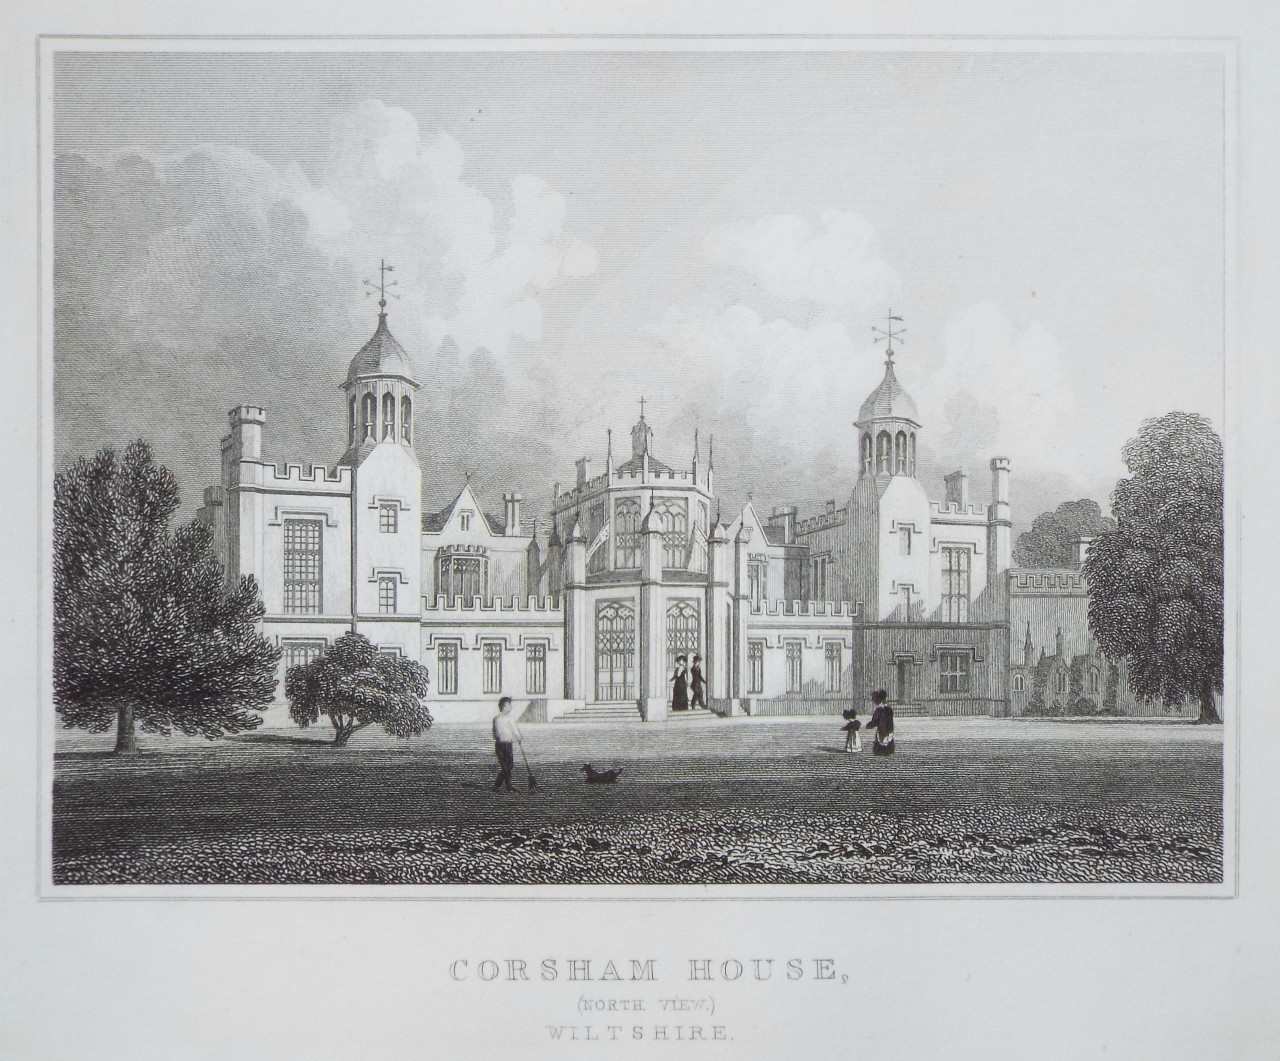 Print - Corsham House, (North View,) Wiltshire. - Cruse